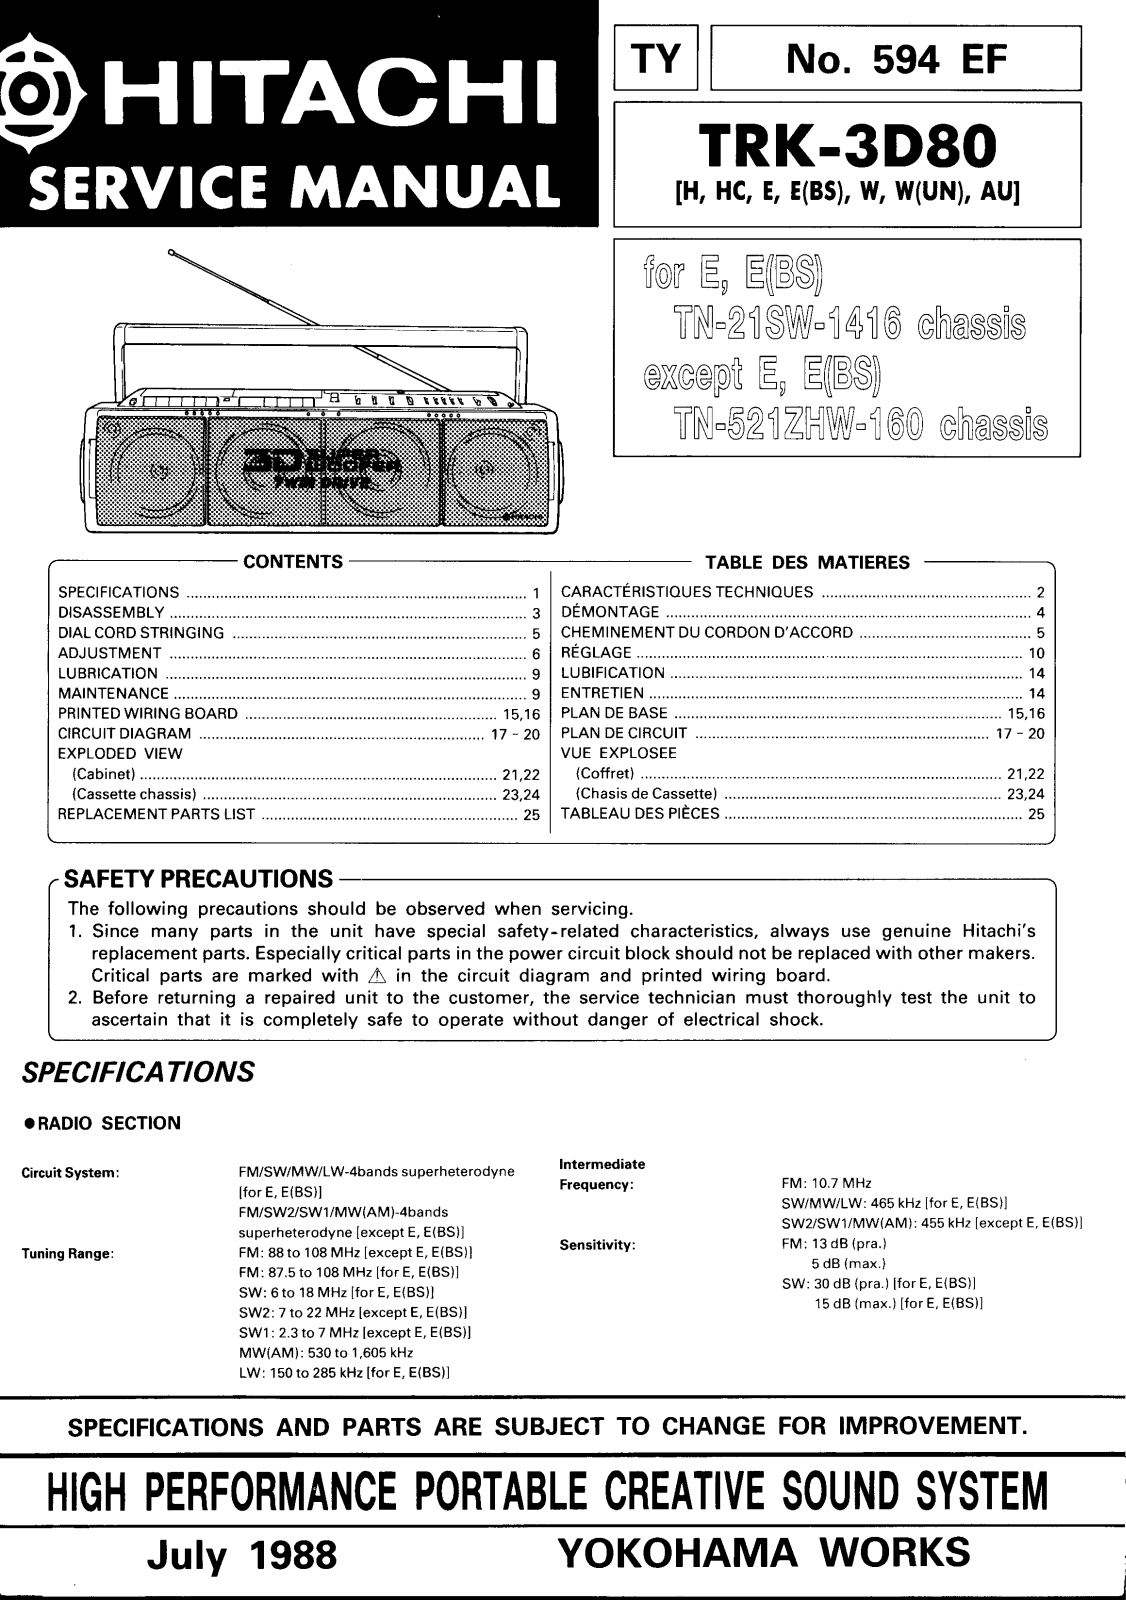 Hitachi TRK-3-D-80 Service Manual